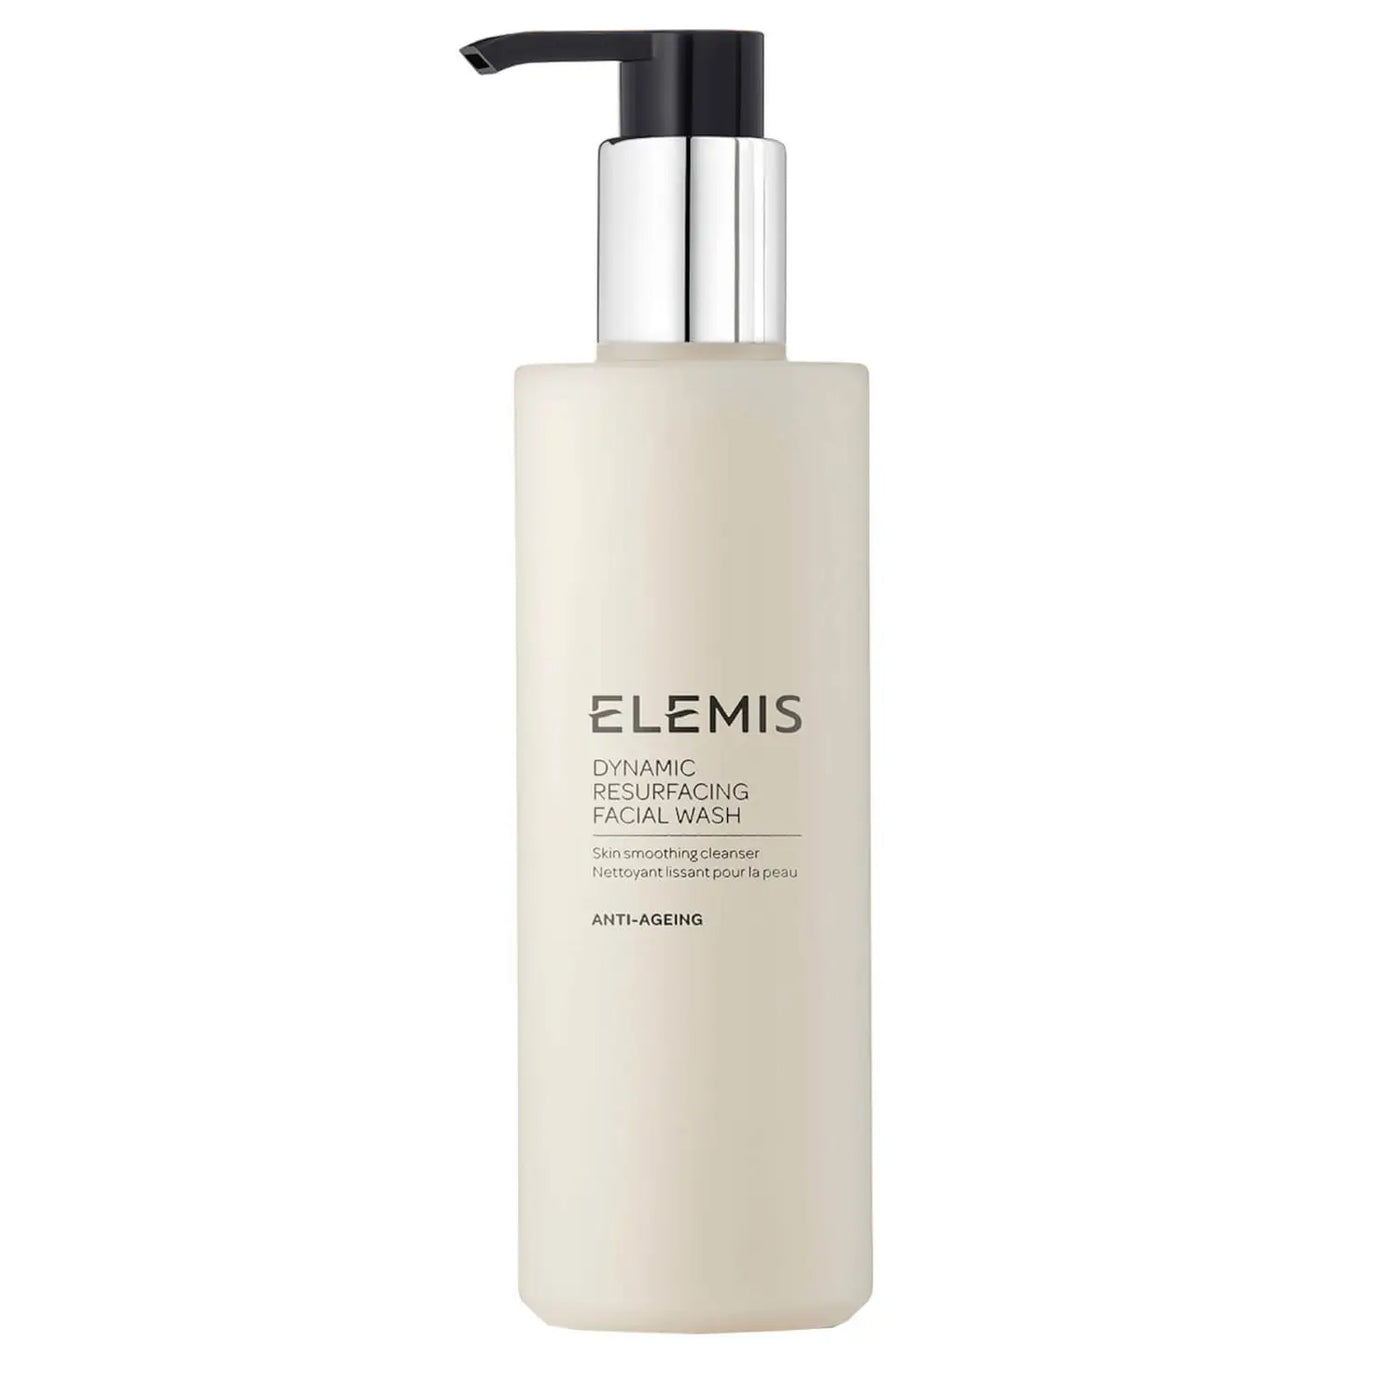 ELEMIS Dynamic Resurfacing Facial Wash Purifica, rinnova, rivitalizza. 200ML TESTER - Profumo Web